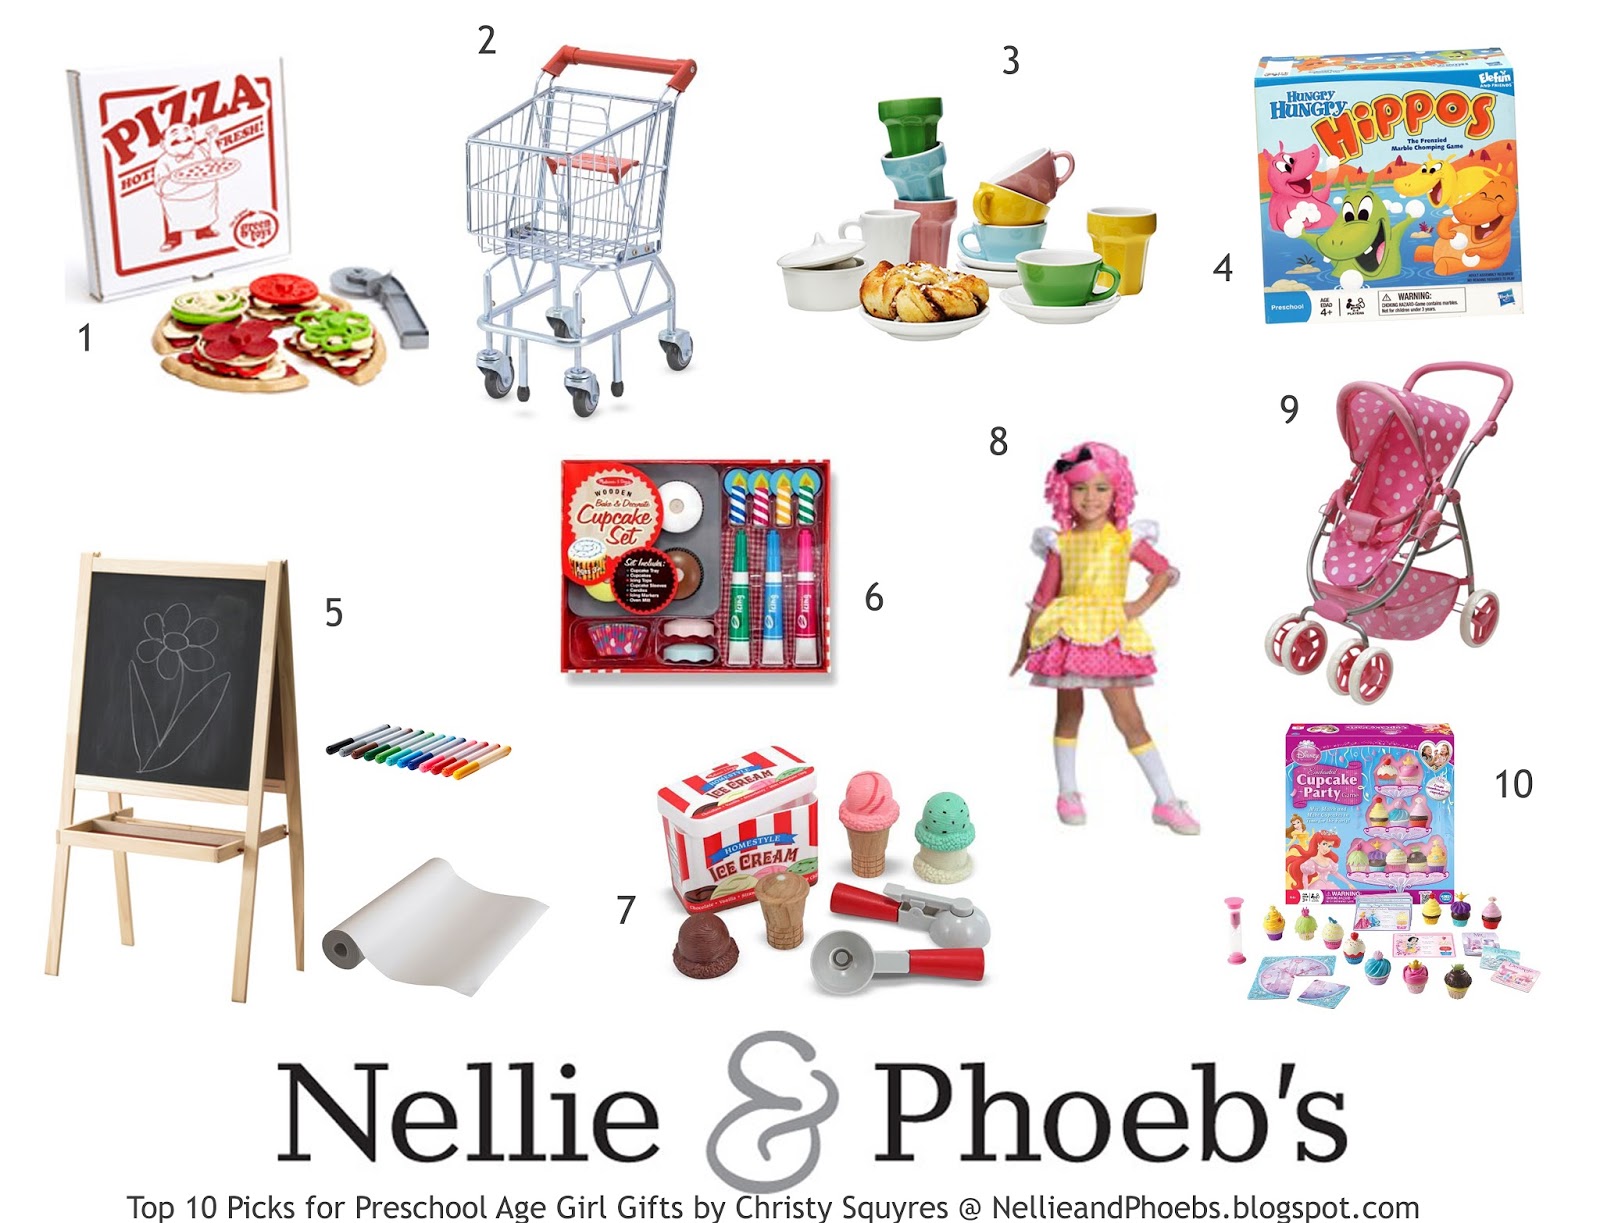 Nellie & Phoeb's: Gift It: My Top 10 Preschool Girl Gifts